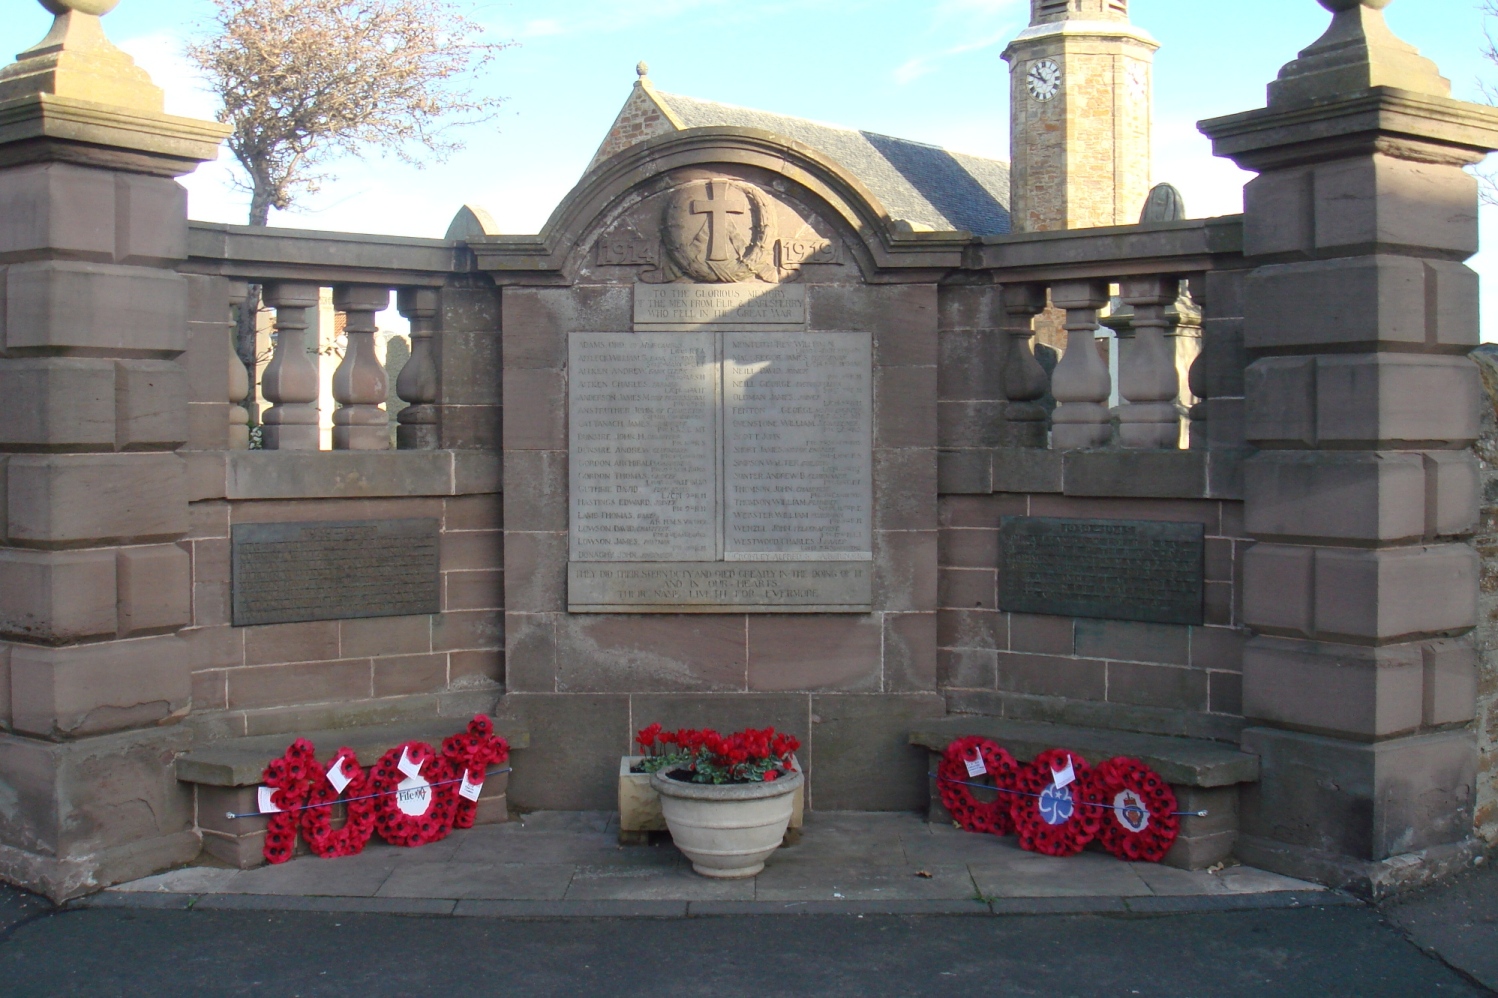 Elie War Memorial. Fife. Scotland